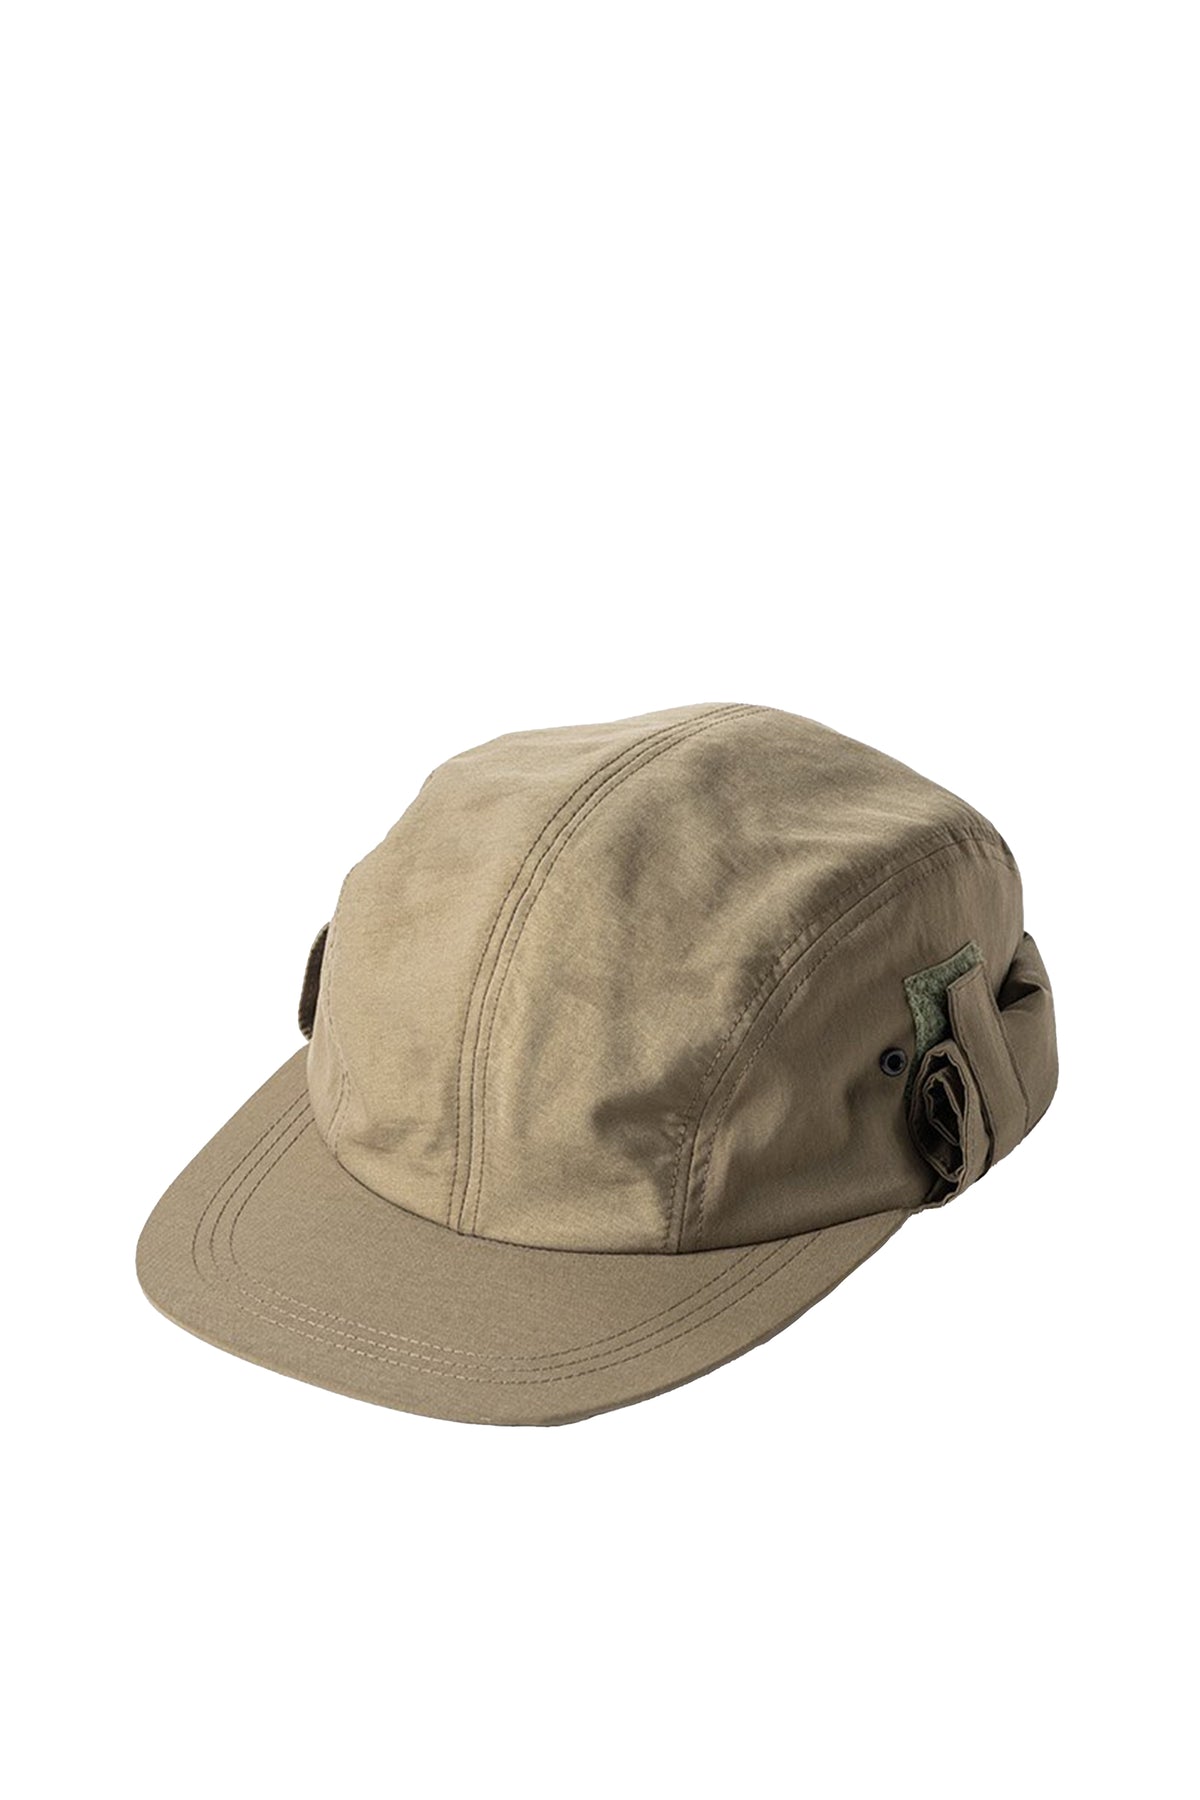 SUNSHADE CAMP CAP / KHA